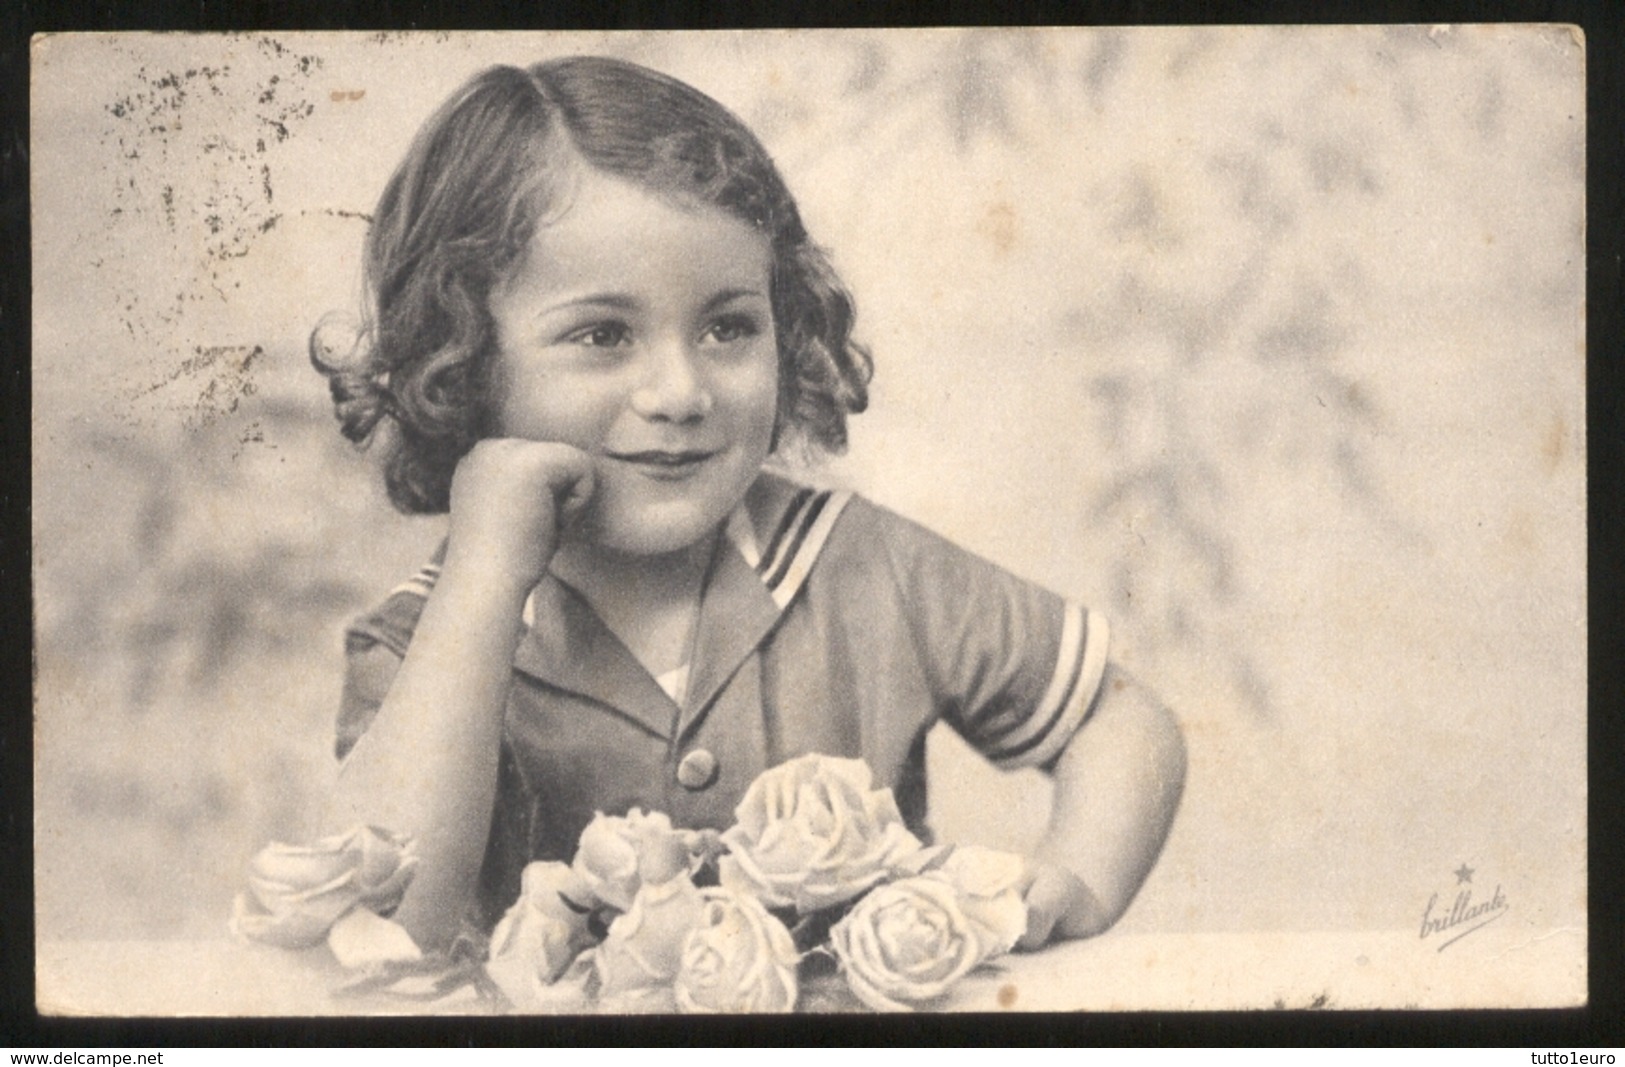 BAMBINI (62) - CHILDREN   KINDER   ENFANTS - CARTOLINA VIAGGIATA NEL 1941 CON TIMBRI CENSURA REGIA MARINA - LIEVE GRINZA - Abbildungen